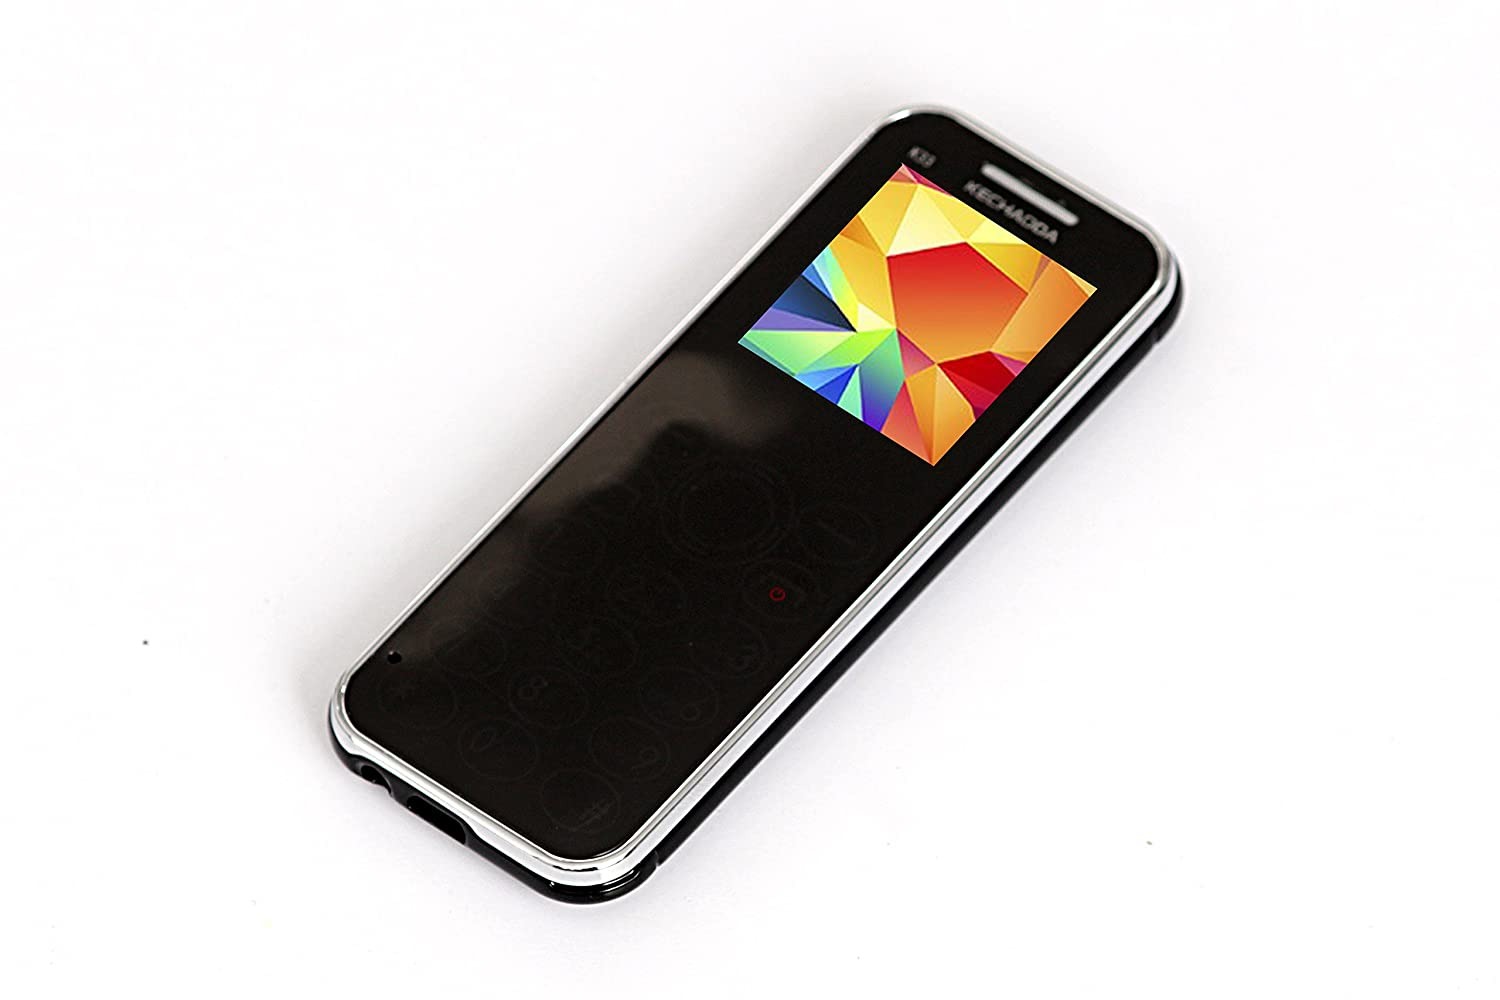 Kechaoda K33 Slim and Dual Sim GSM Mobile Phone with External Memory Slot 1.44 Inch Display Rear VGA Camera with Flash Light Bluetooth - Black